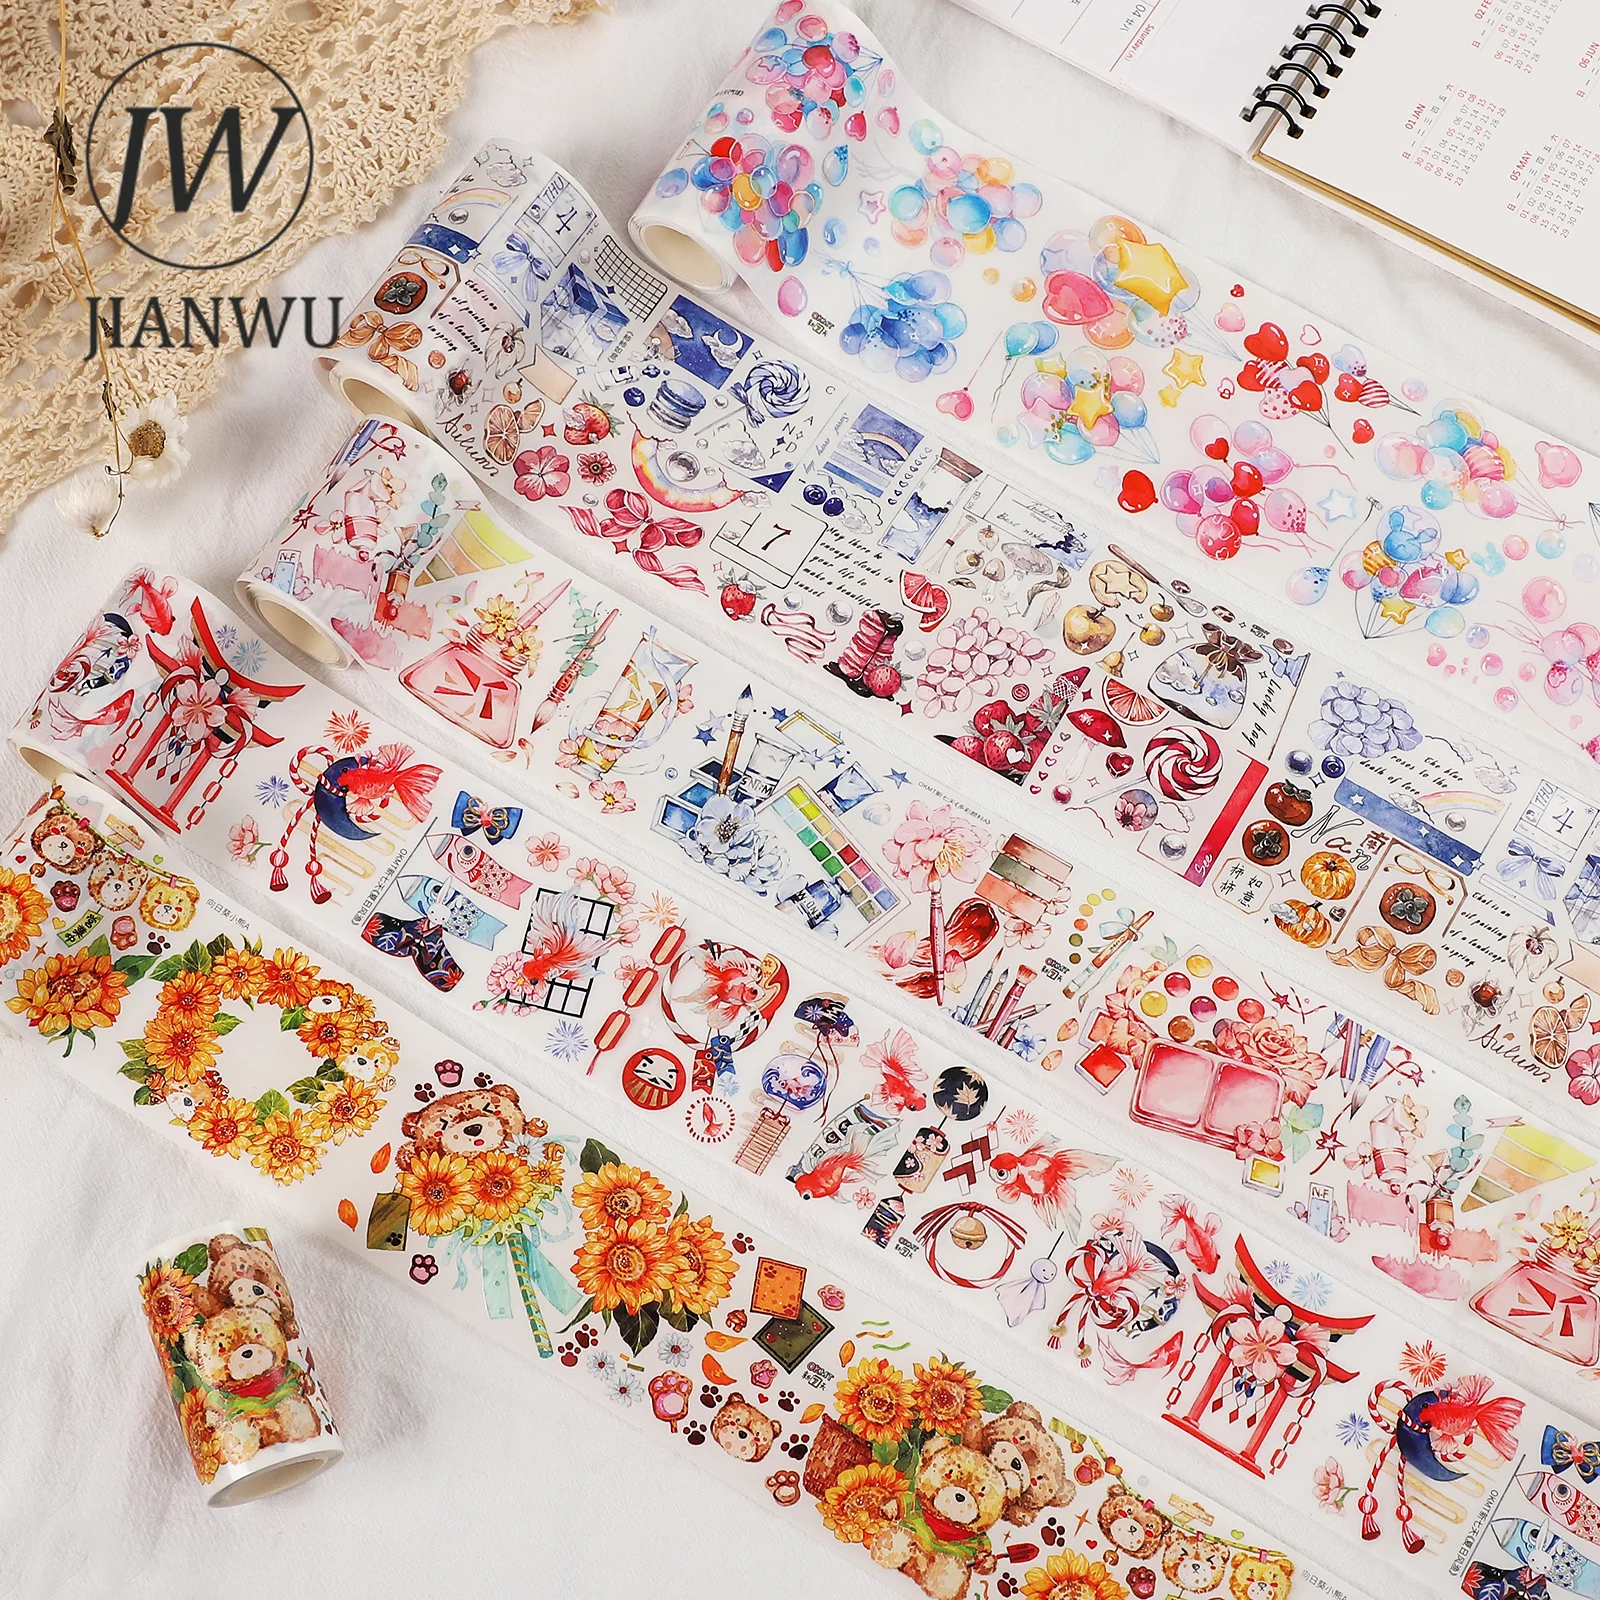 

JIANWU 300cm Cute Journal Material PET Washi Tape DIY Multi-Specification Scrapbooking Decoration Masking Tape Kawaii Stationery